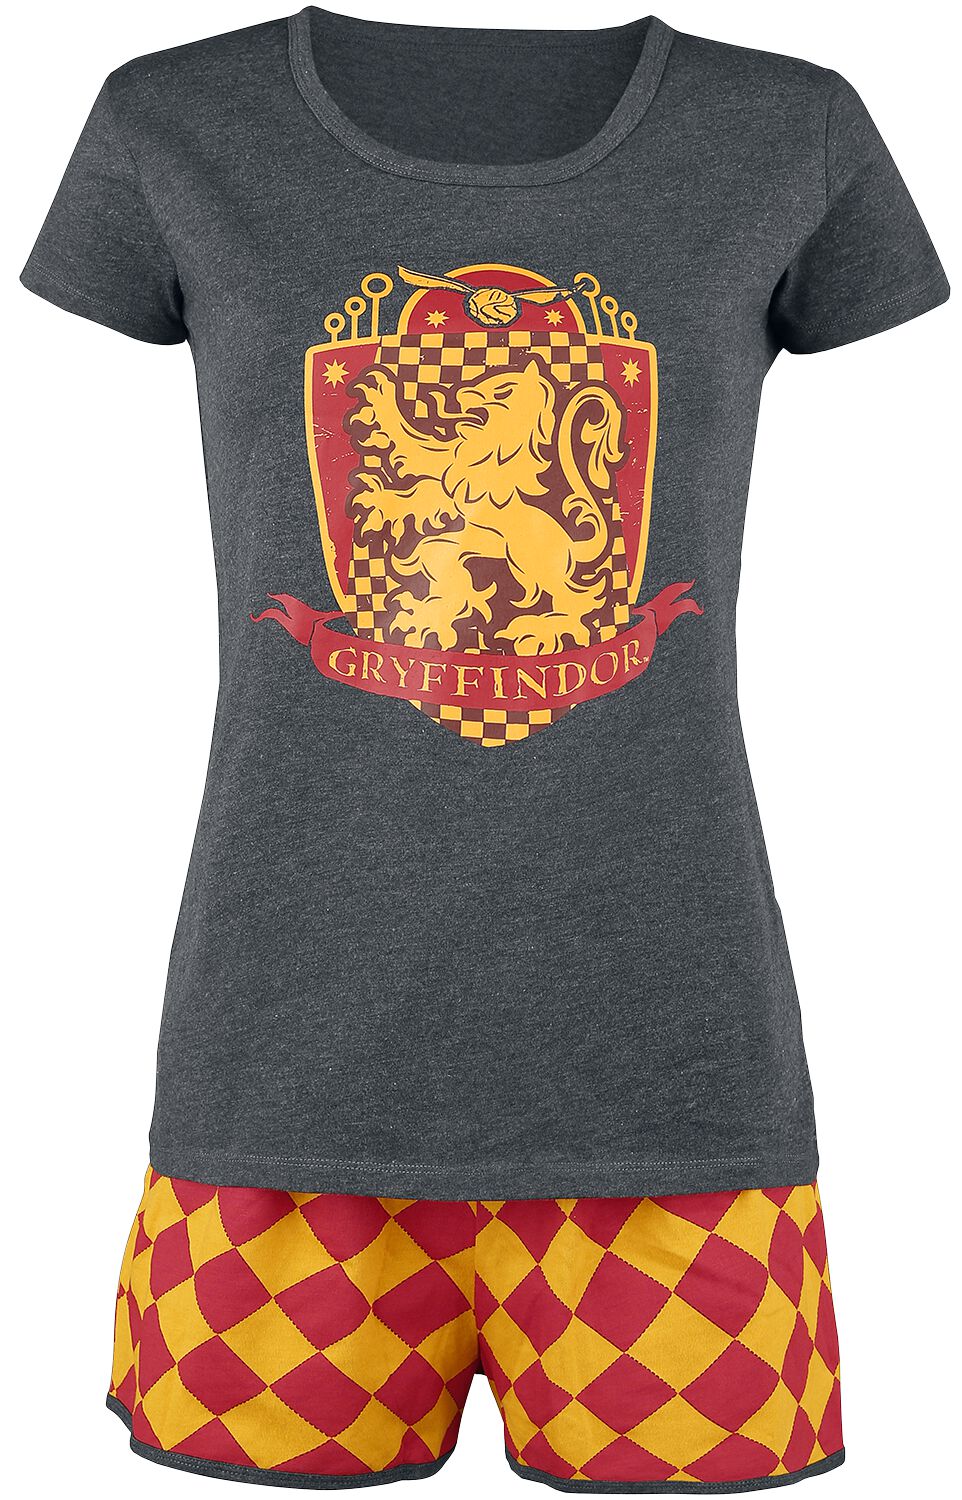 Image of Pigiama di Harry Potter - Gryffindor Quidditch - XS a 5XL - Donna - grigio/rosso/giallo